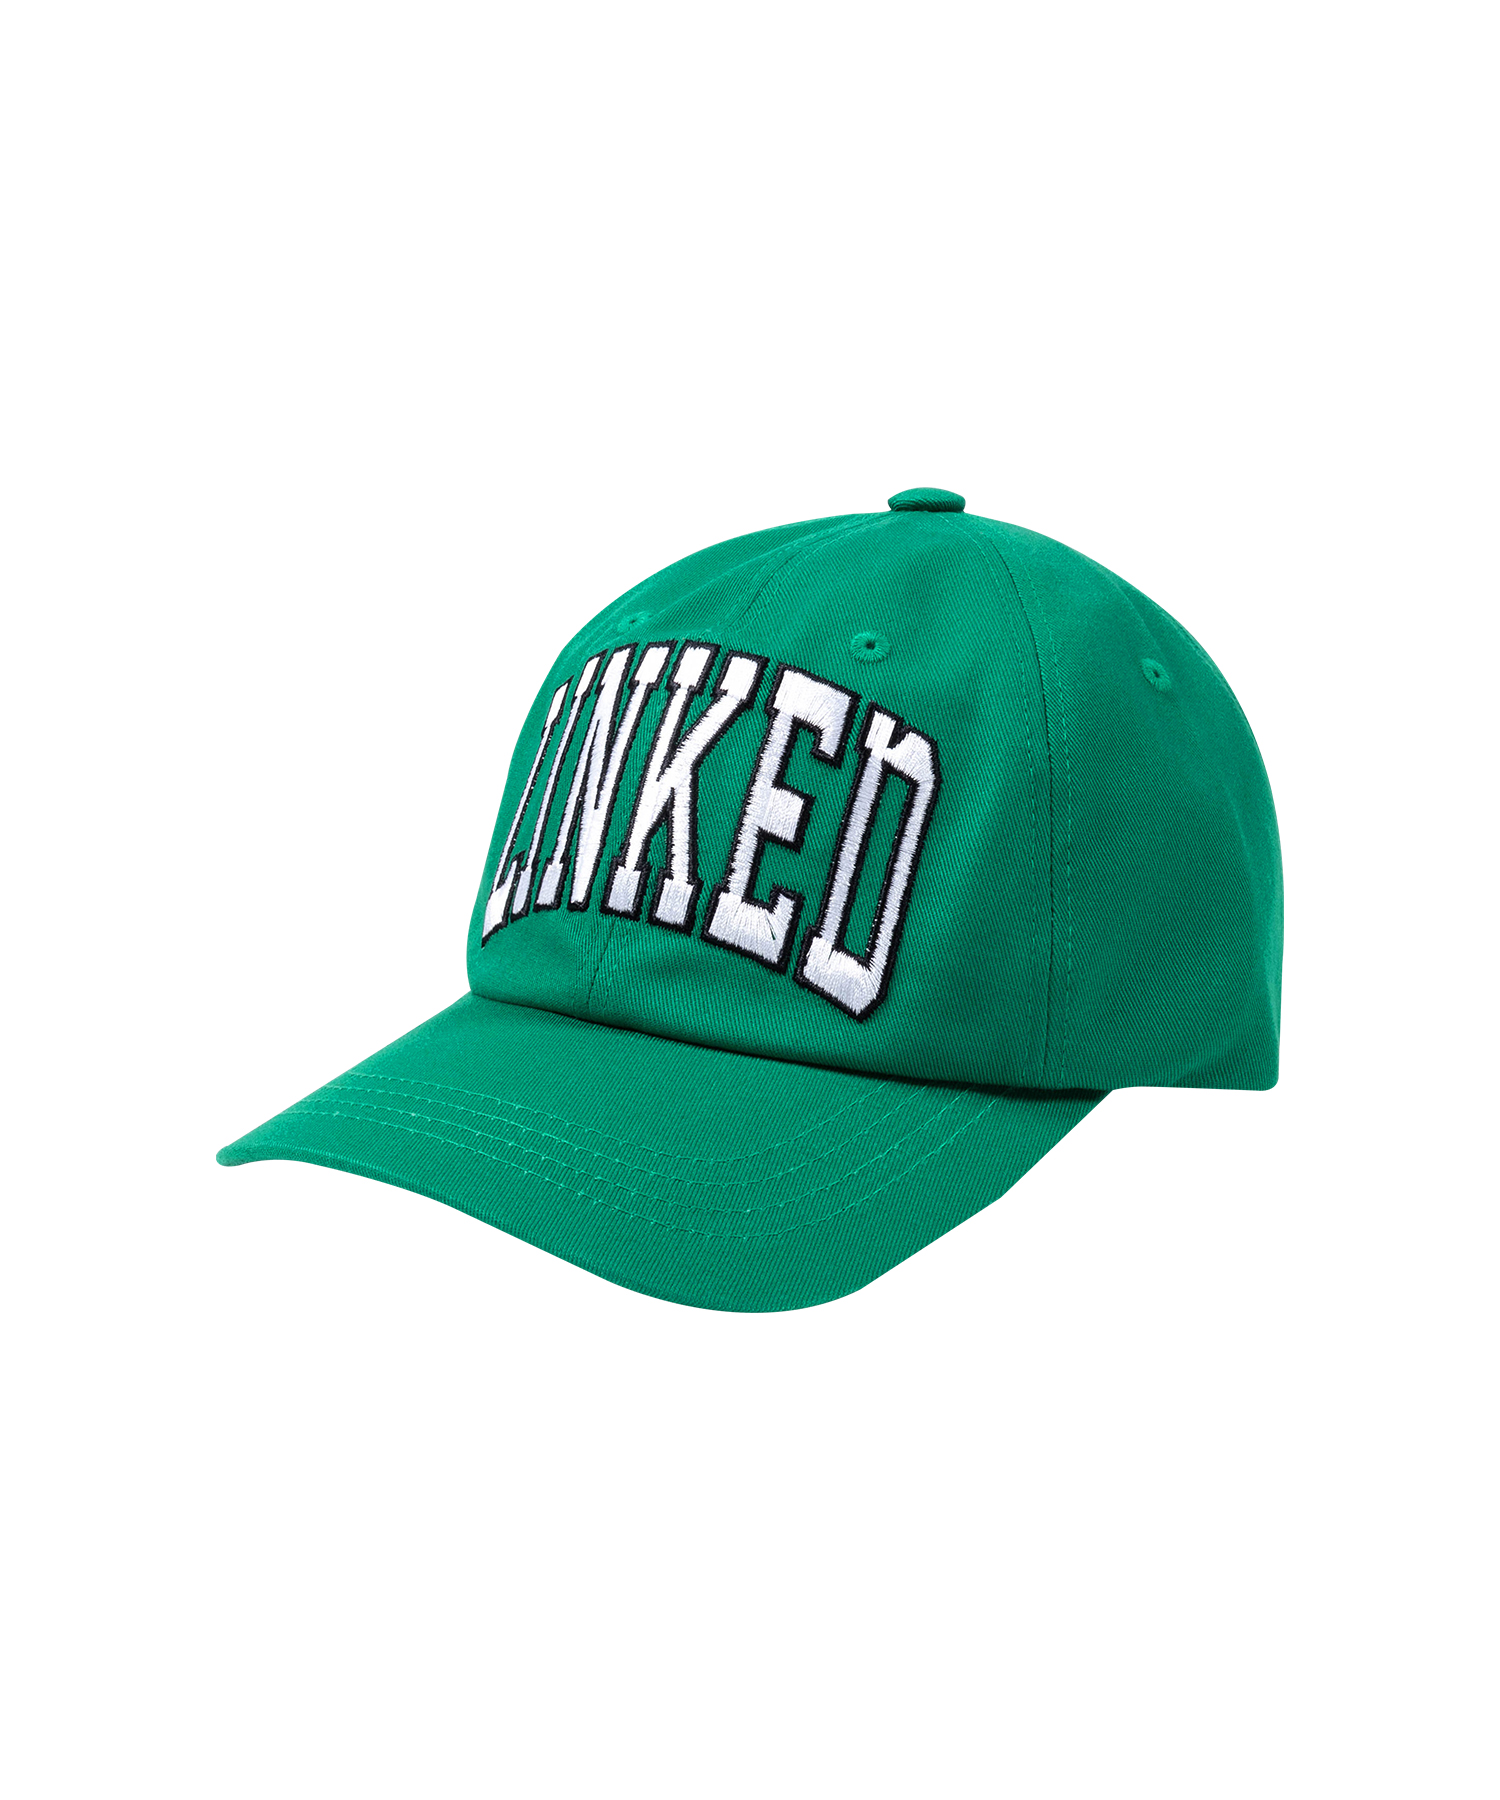 LINKED BALL CAP [GREEN]